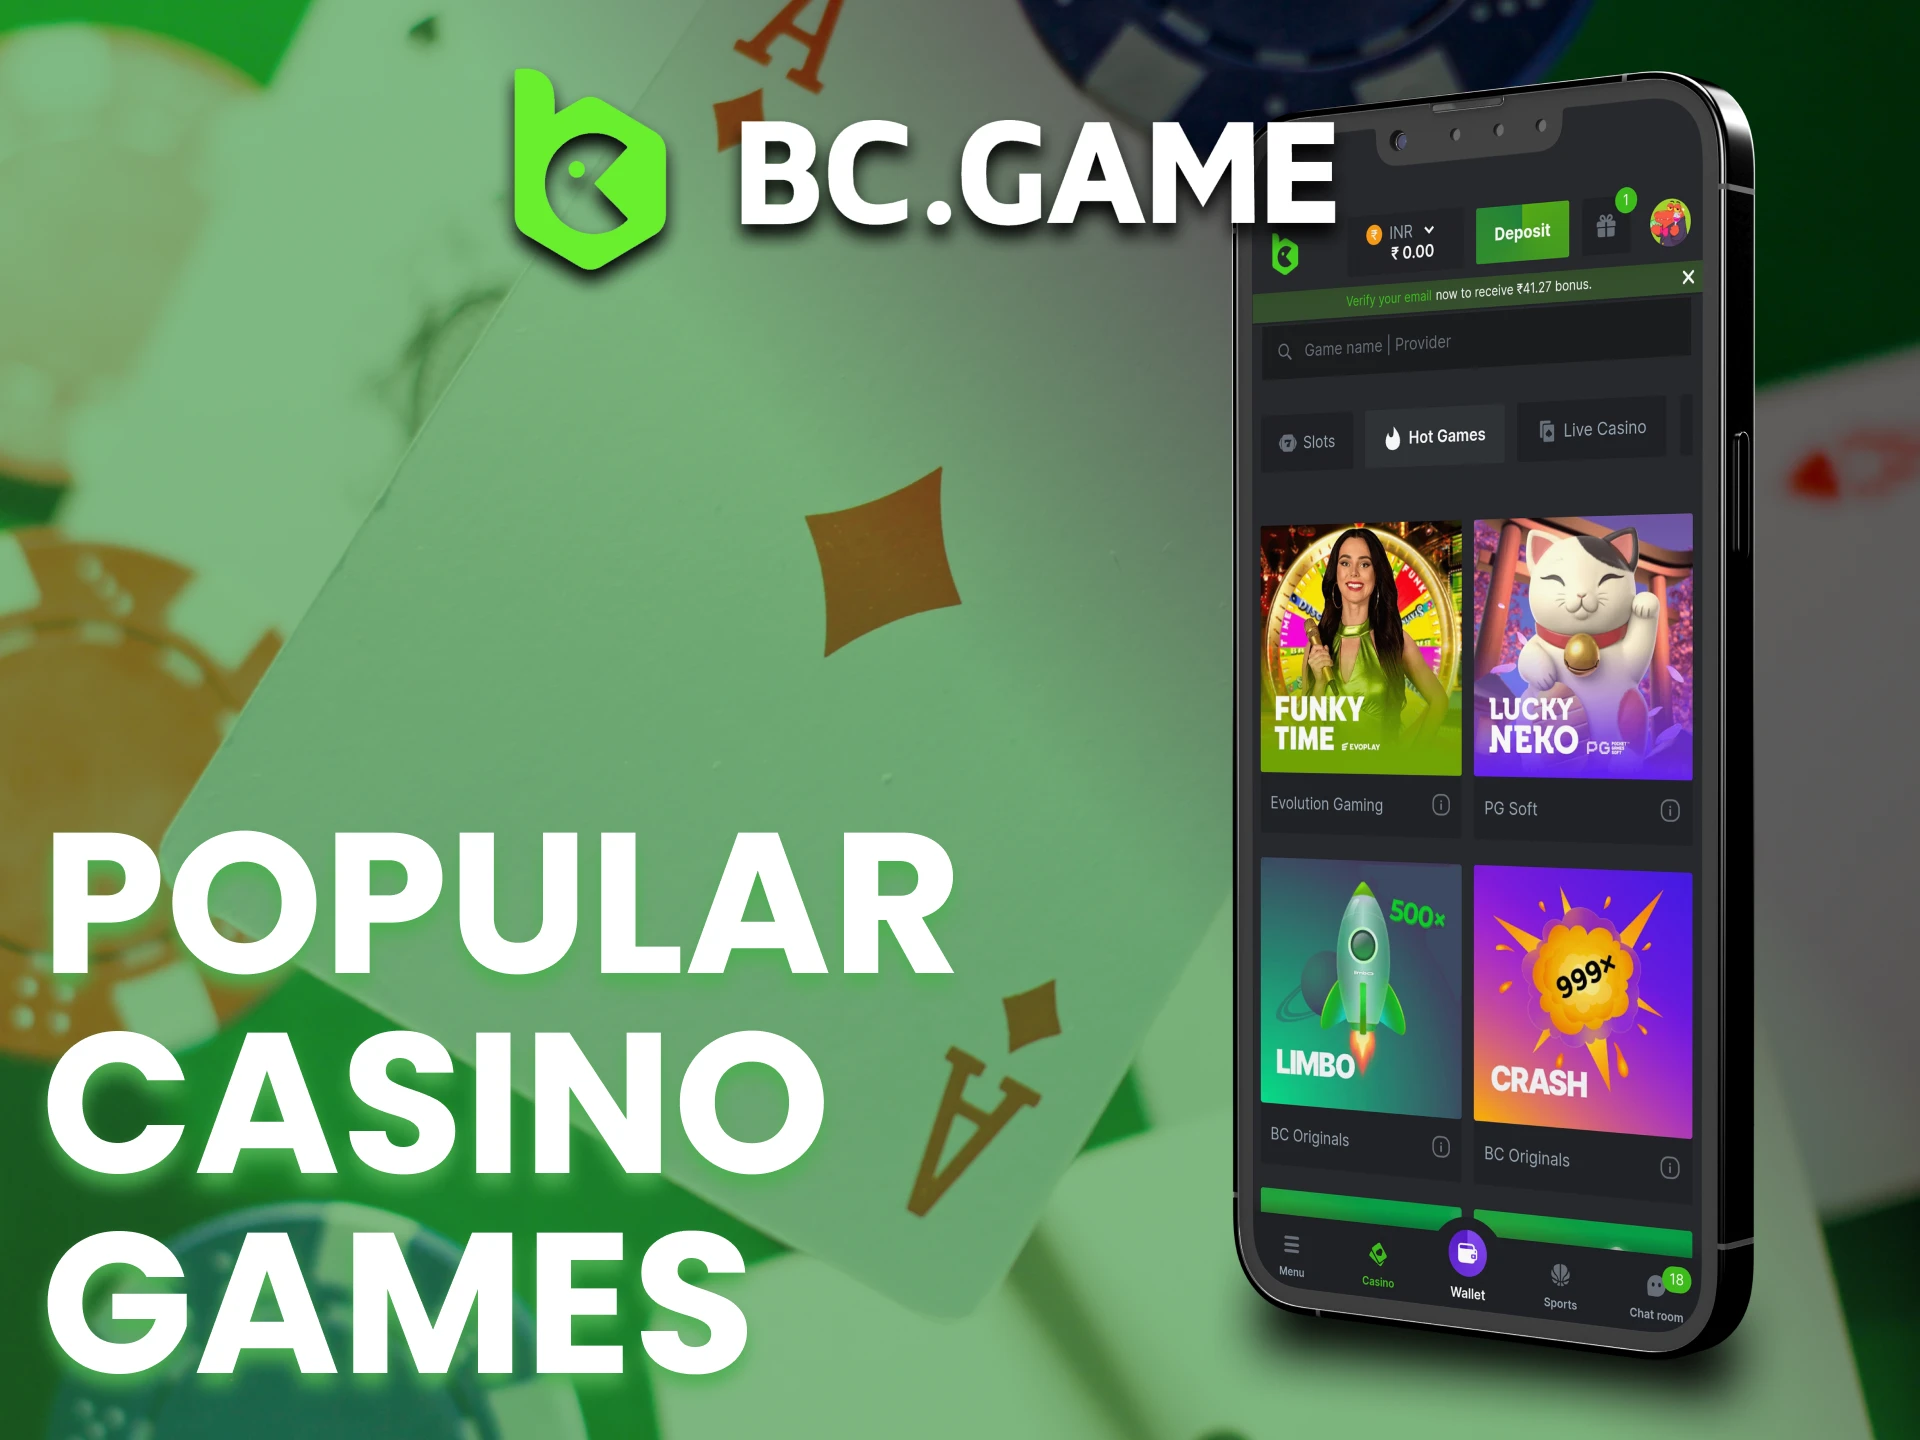 Play popular casino games using BC Game app.